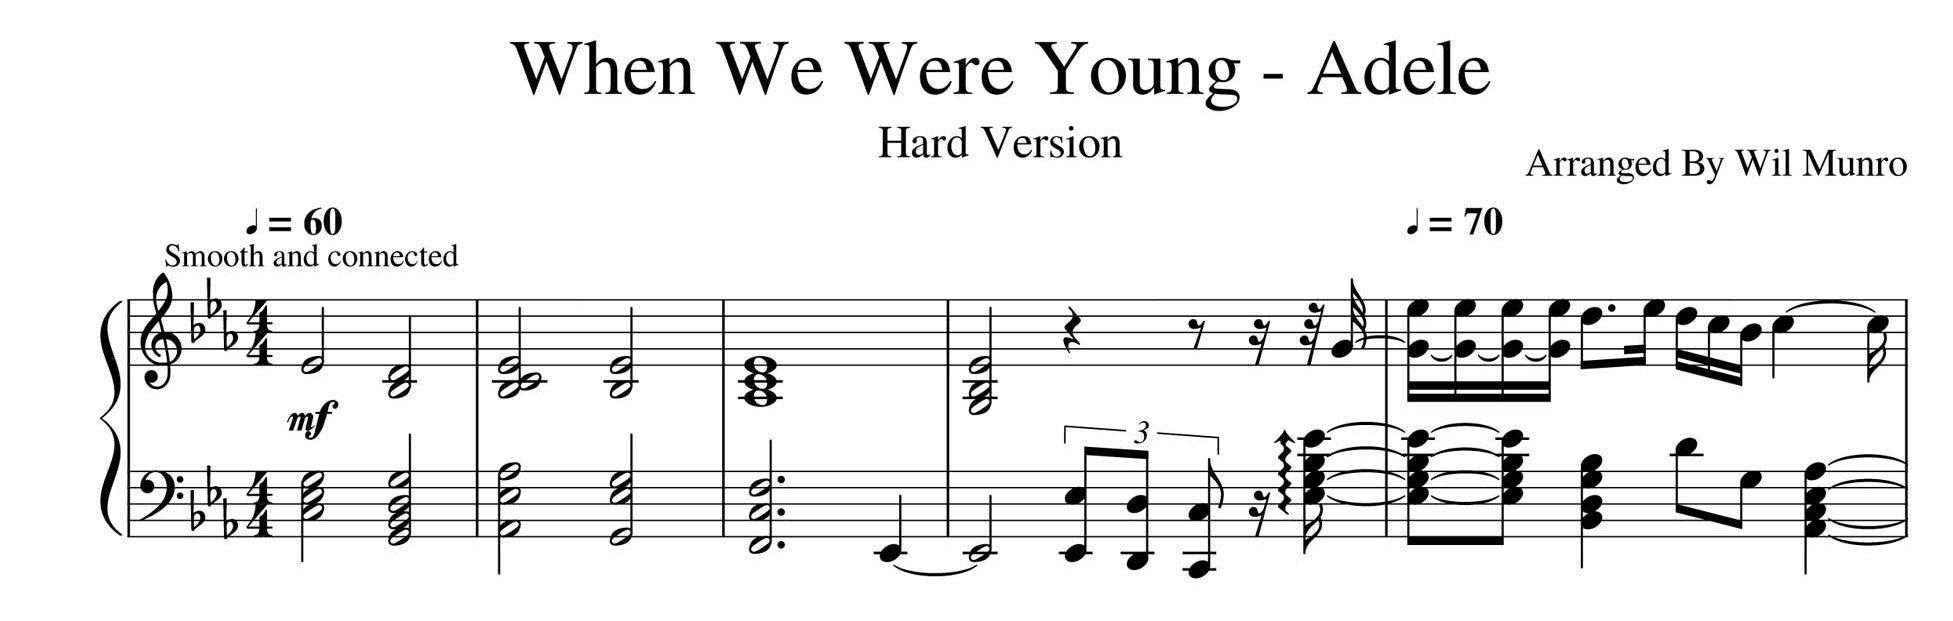 نت پیانو وقتی جوان بودیم When we were young ادل